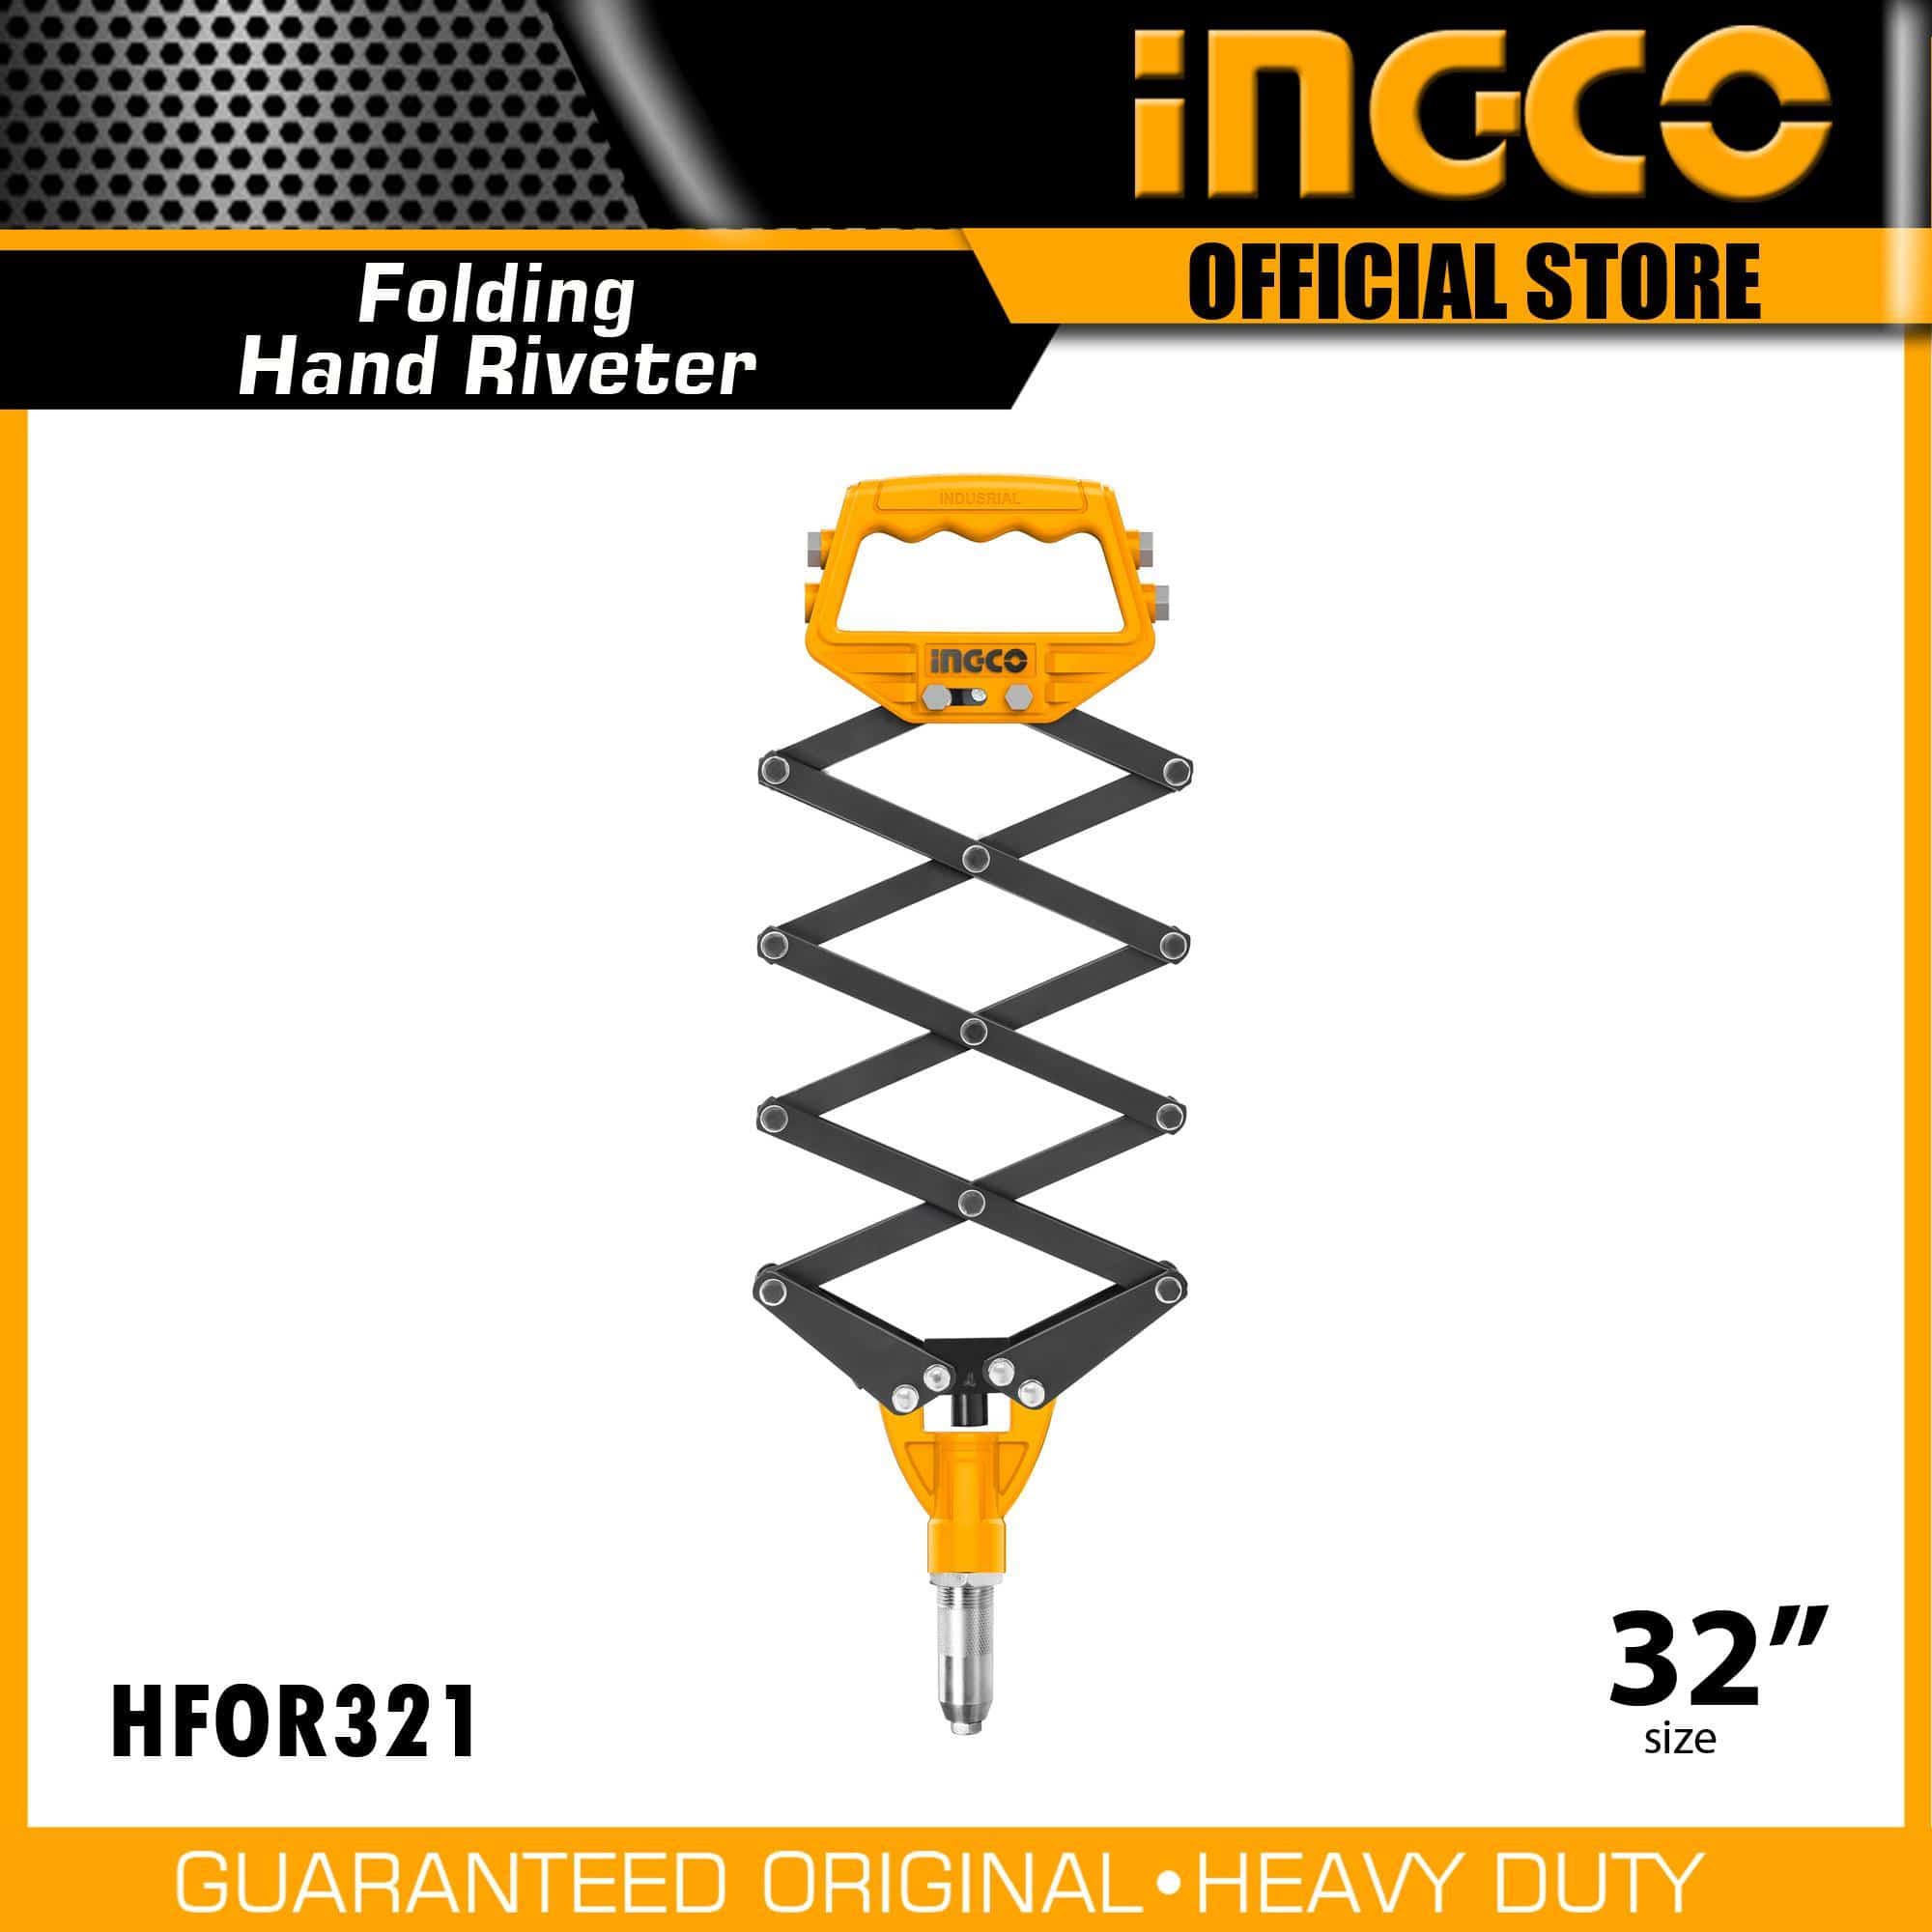 Ingco 32" Folding Hand Riveter – HFOR321 | Supply Master | Accra, Ghana Tools Building Steel Engineering Hardware tool